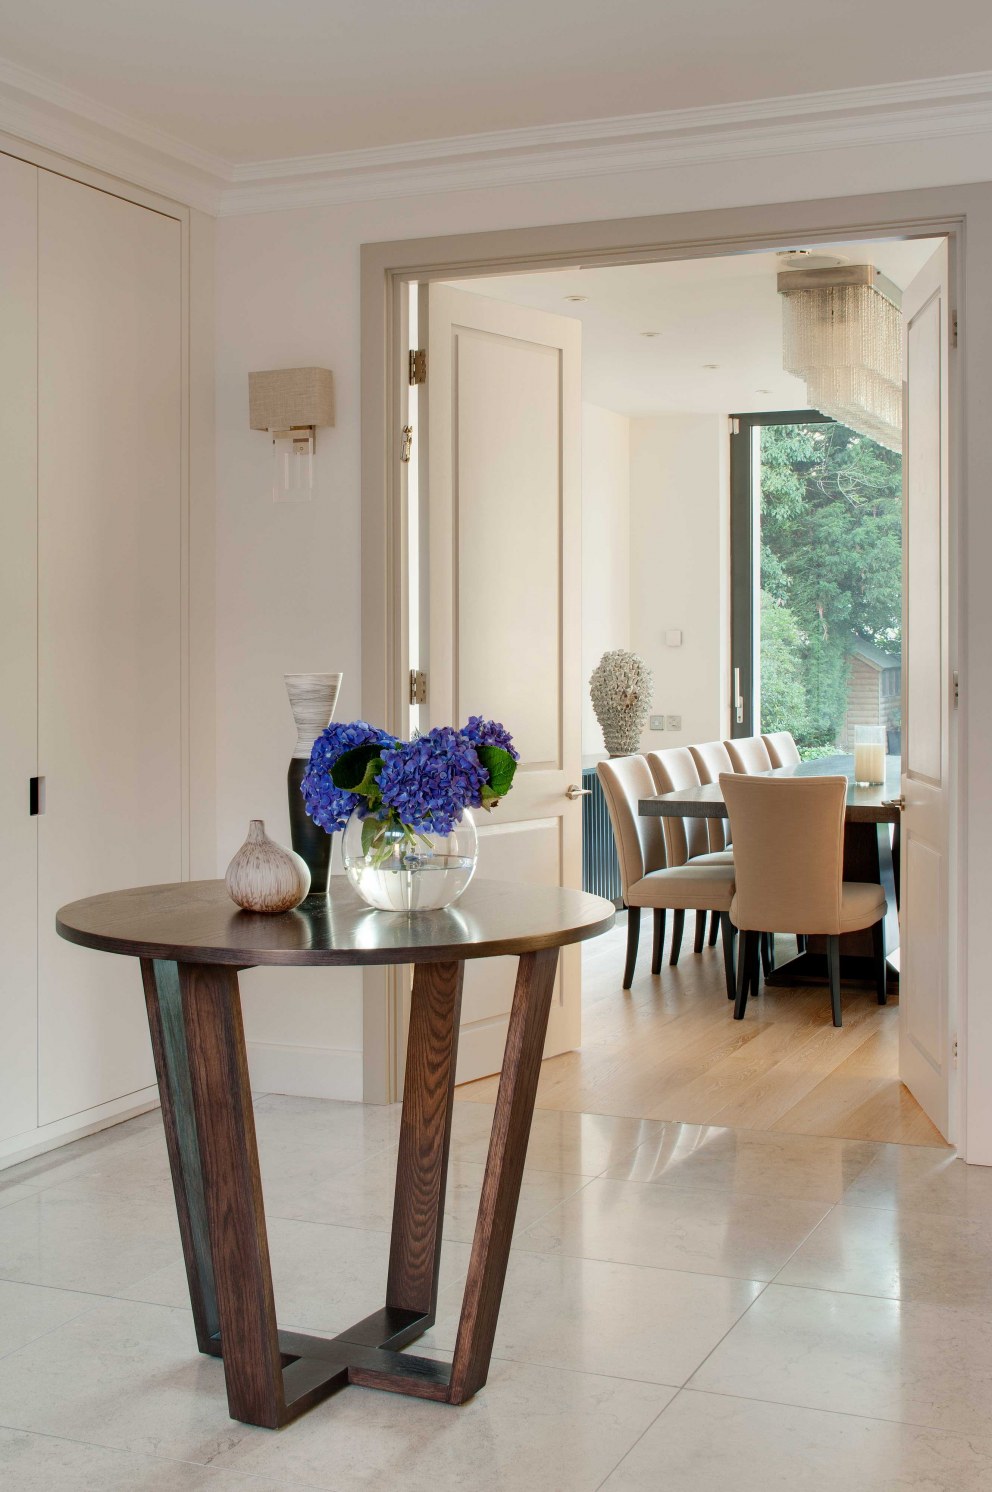 Classic Contemporary Living | Hallway onto Dining Room | Interior Designers